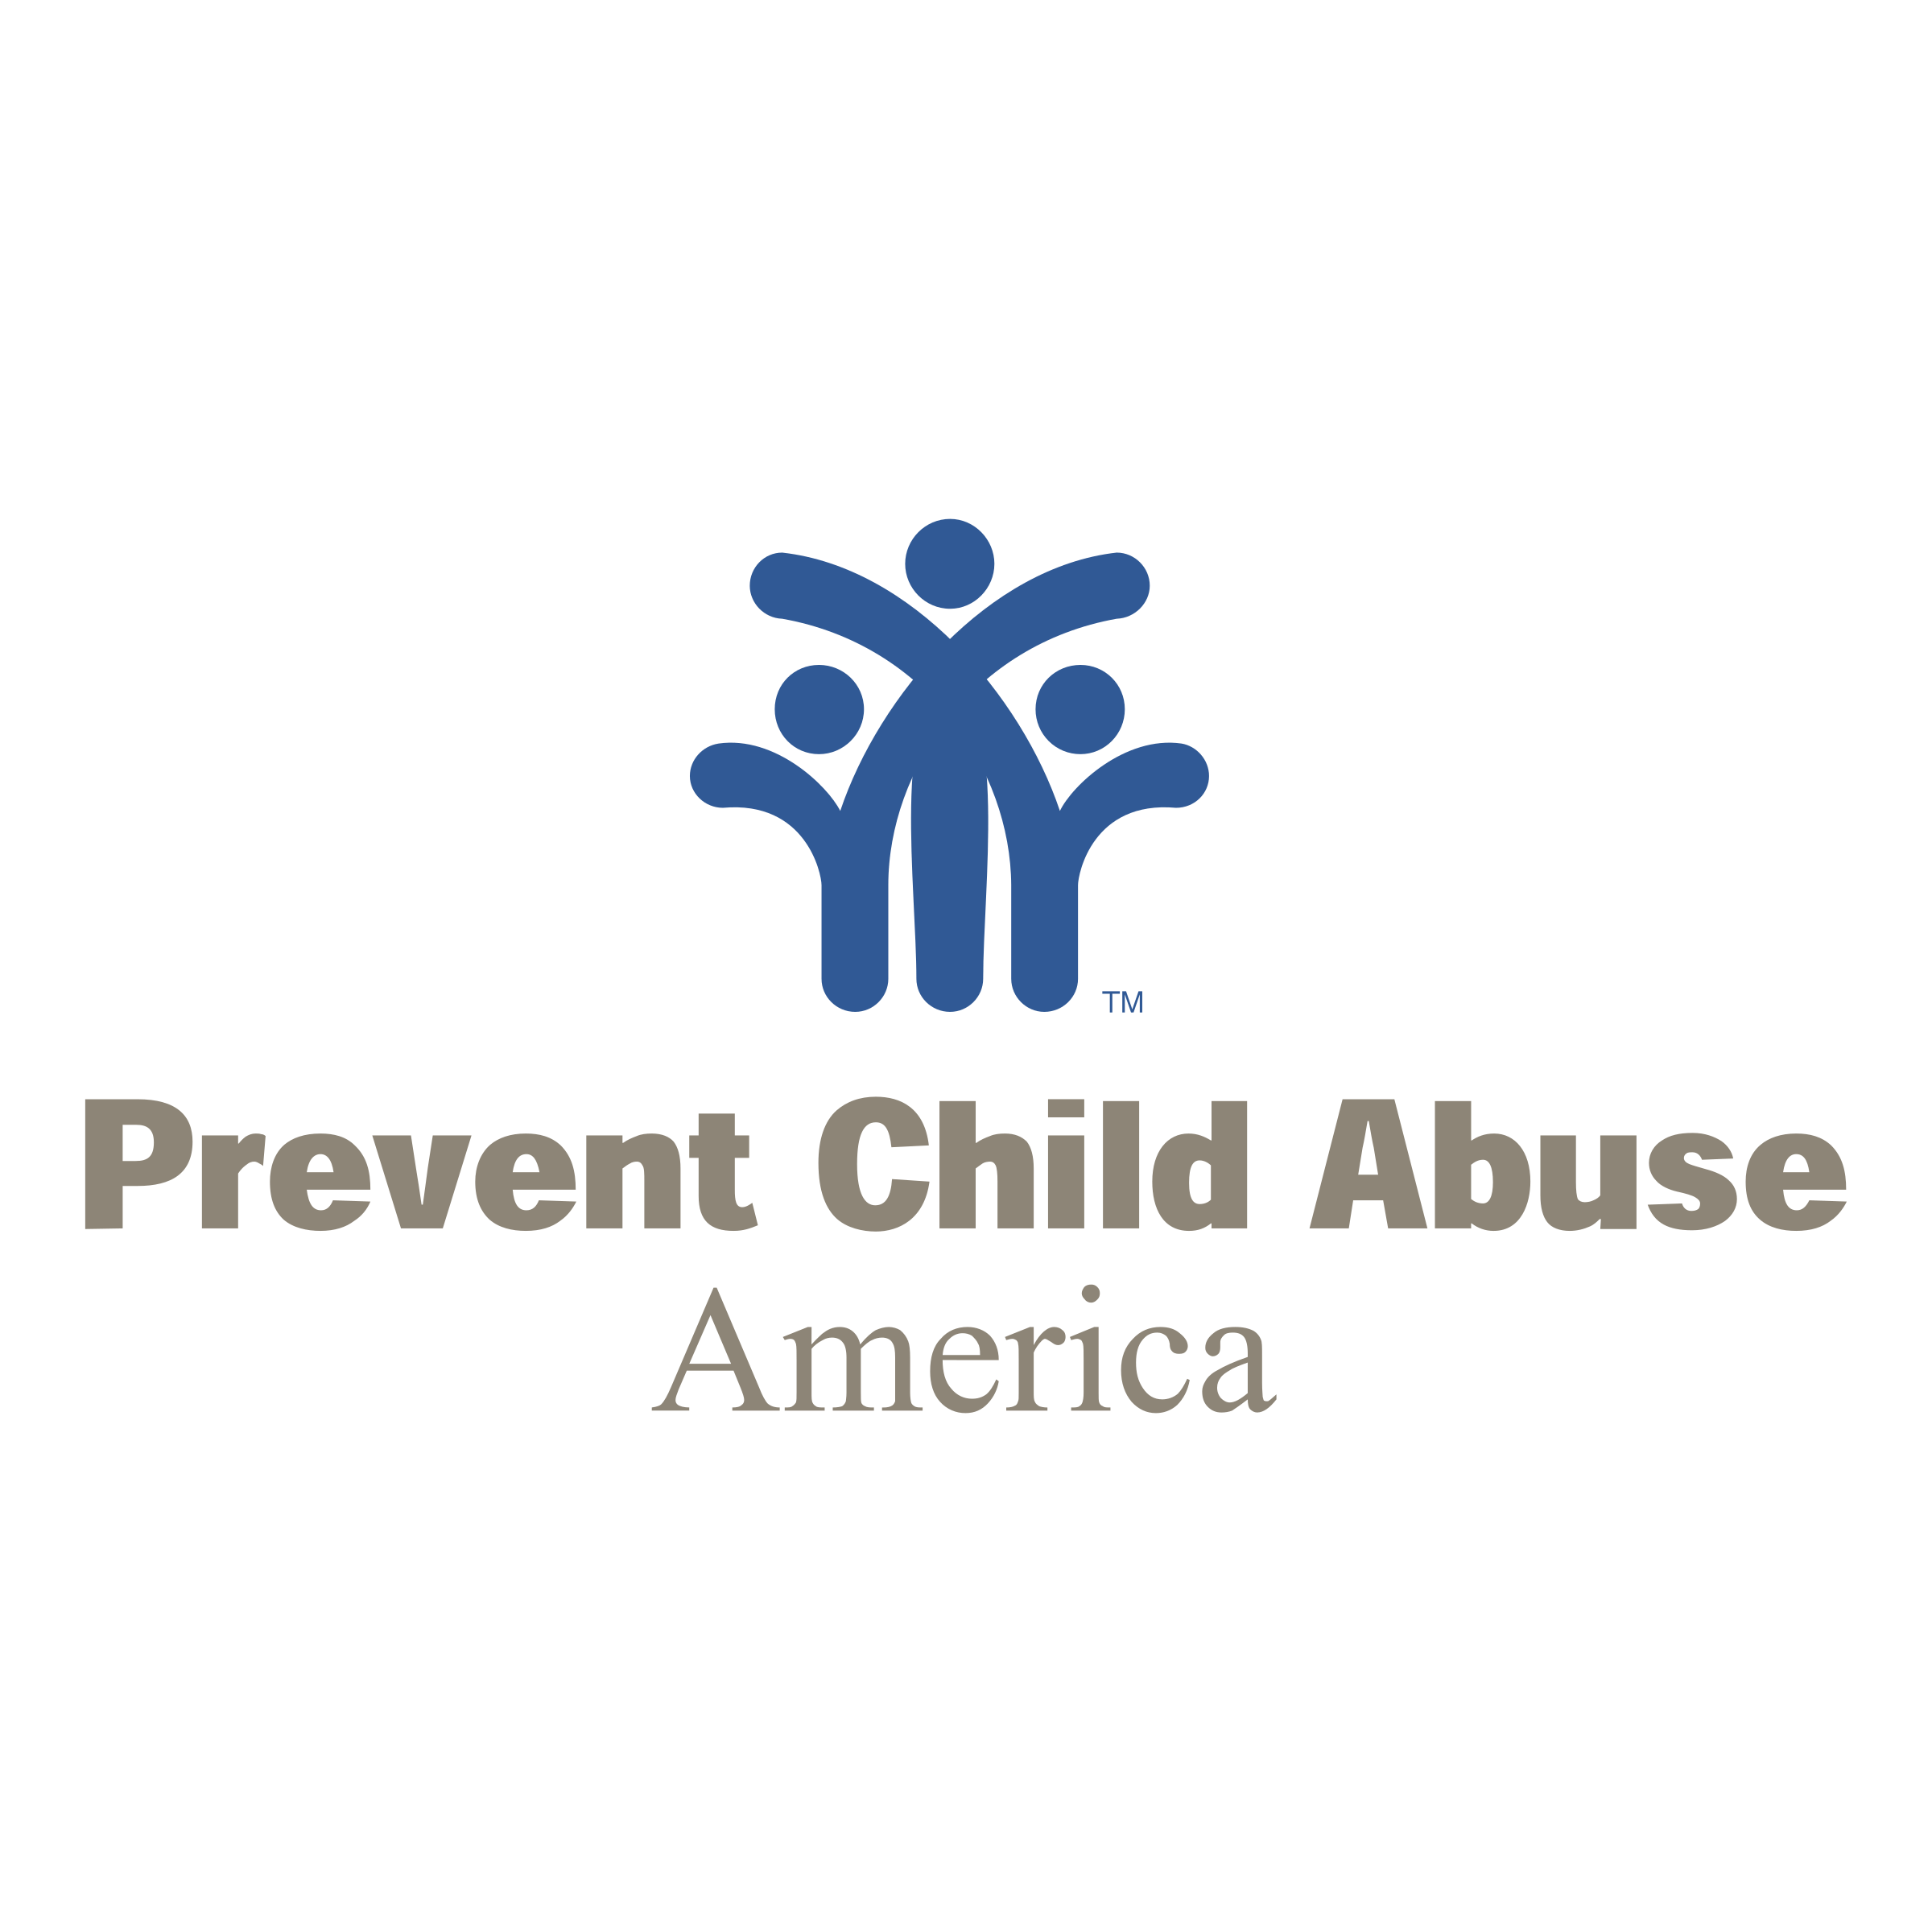 Abuse Logo - Prevent Child Abuse America Logo PNG Transparent & SVG Vector ...